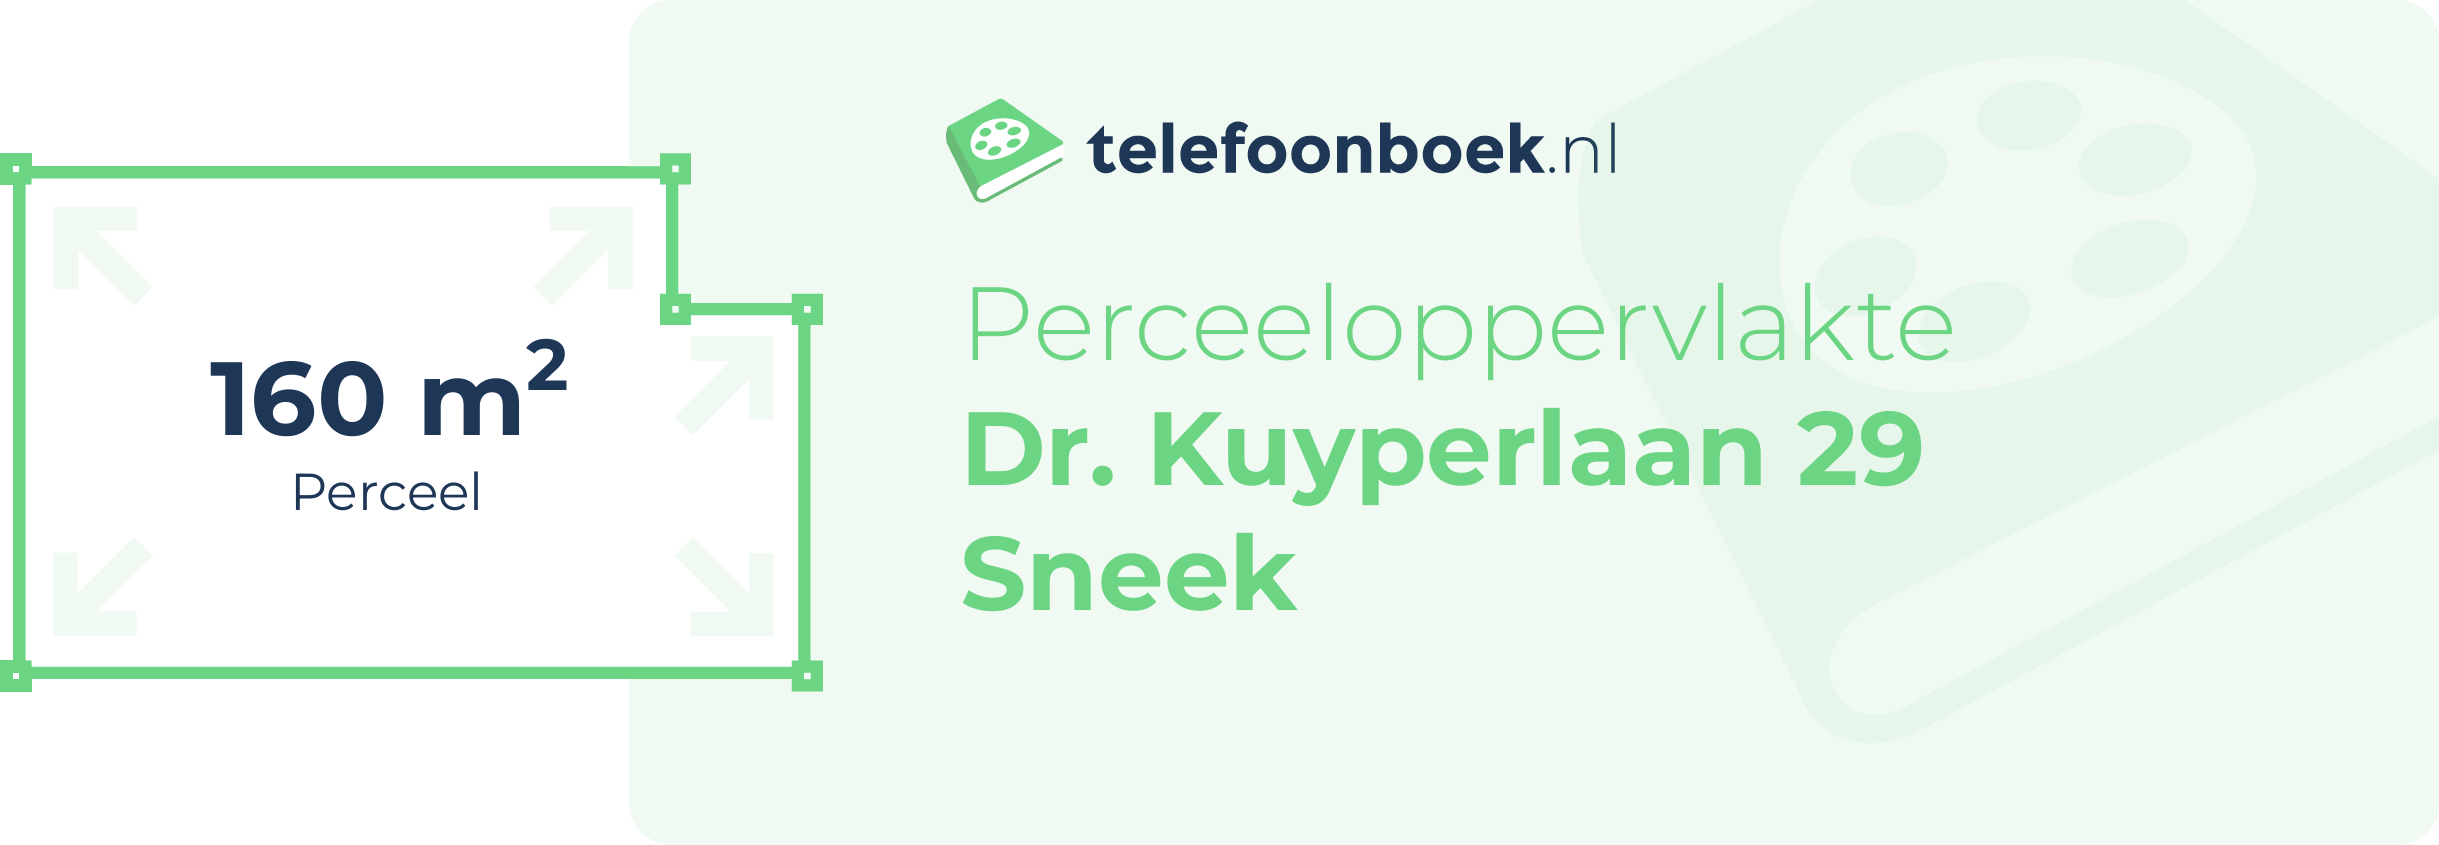 Perceeloppervlakte Dr. Kuyperlaan 29 Sneek